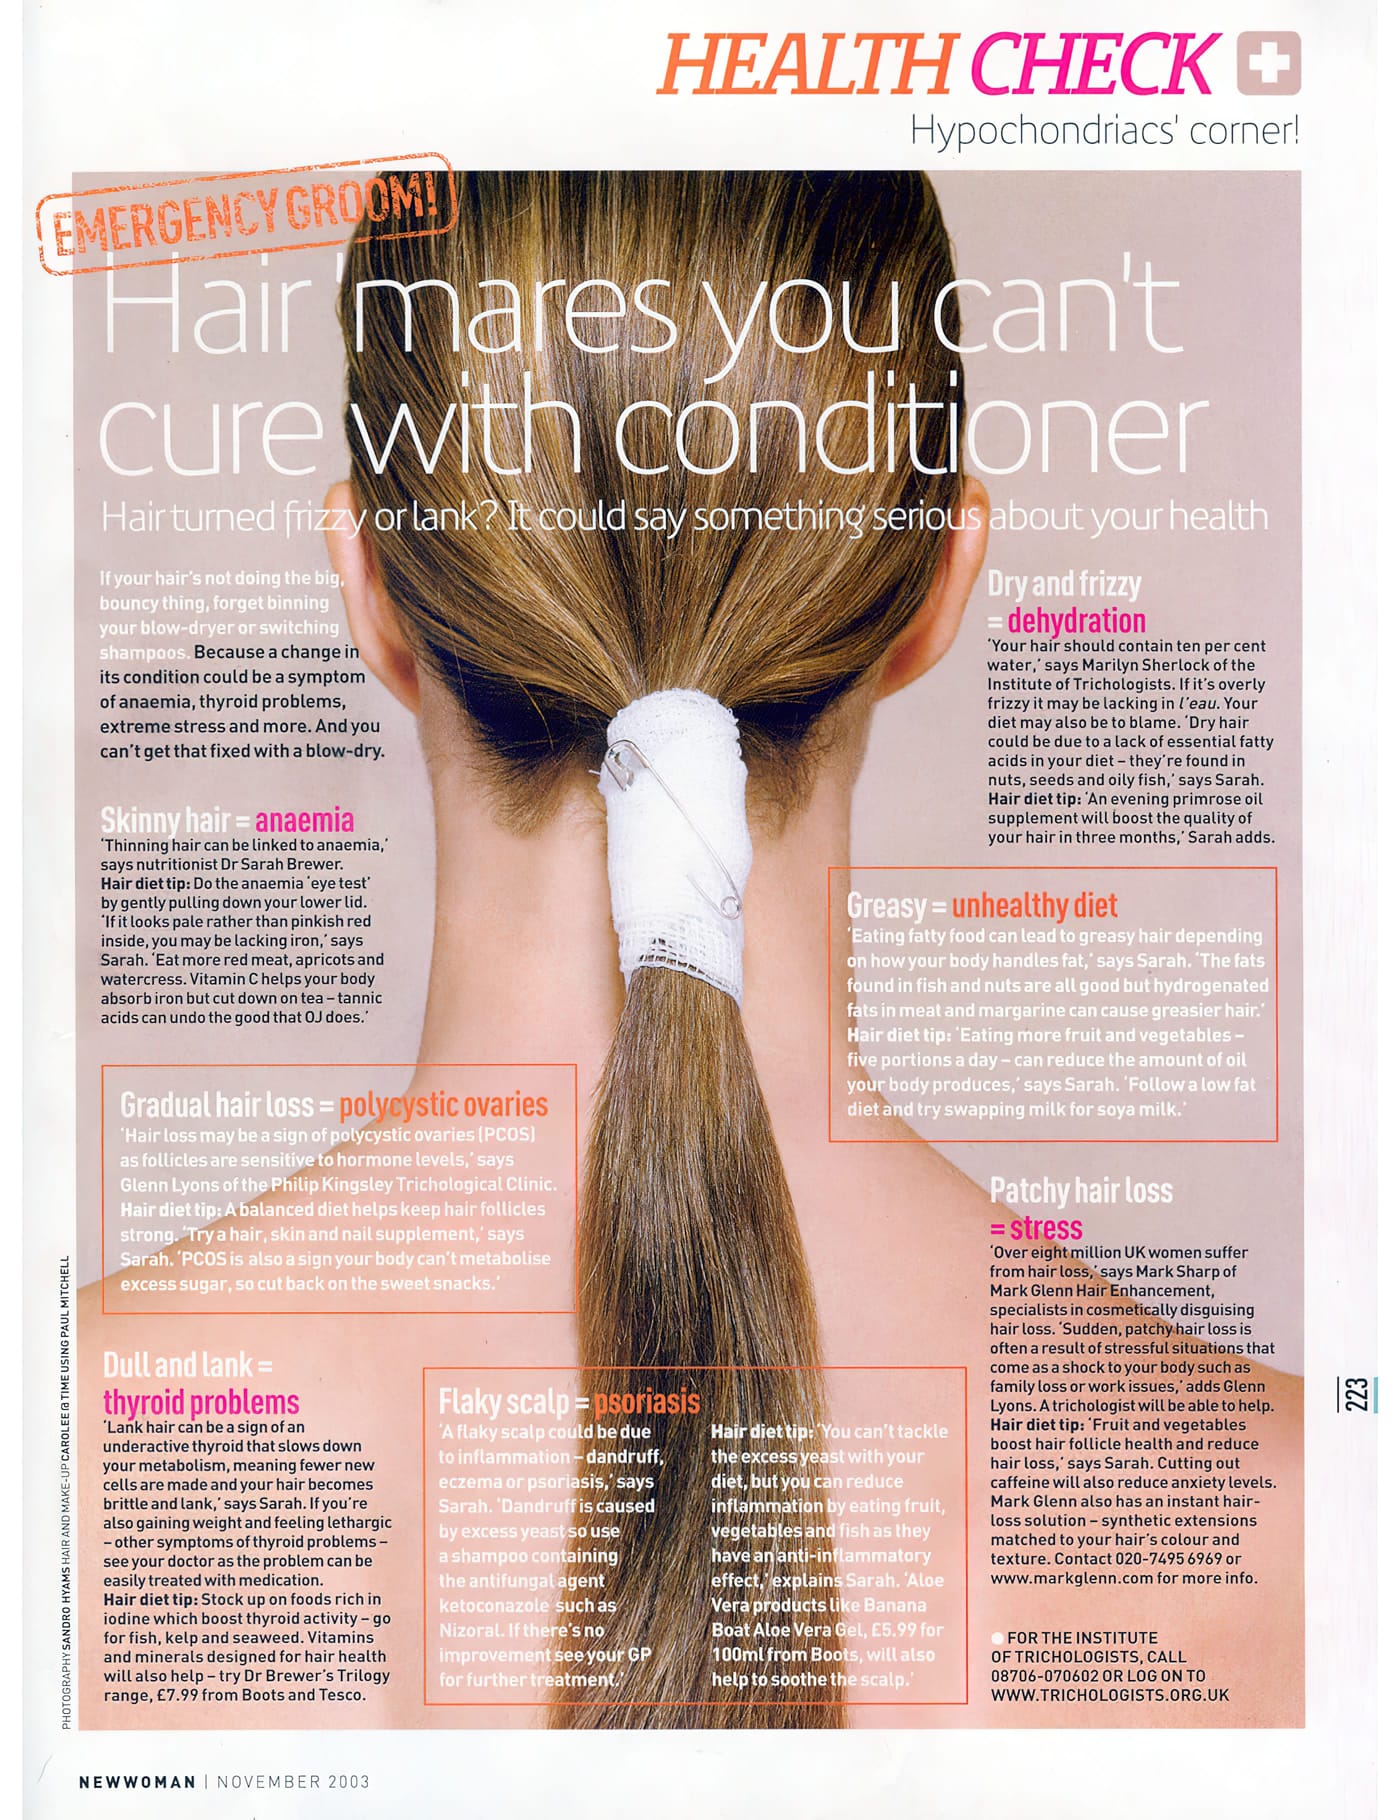 Mark Glenn's instant hair loss solution - New Woman Magazine